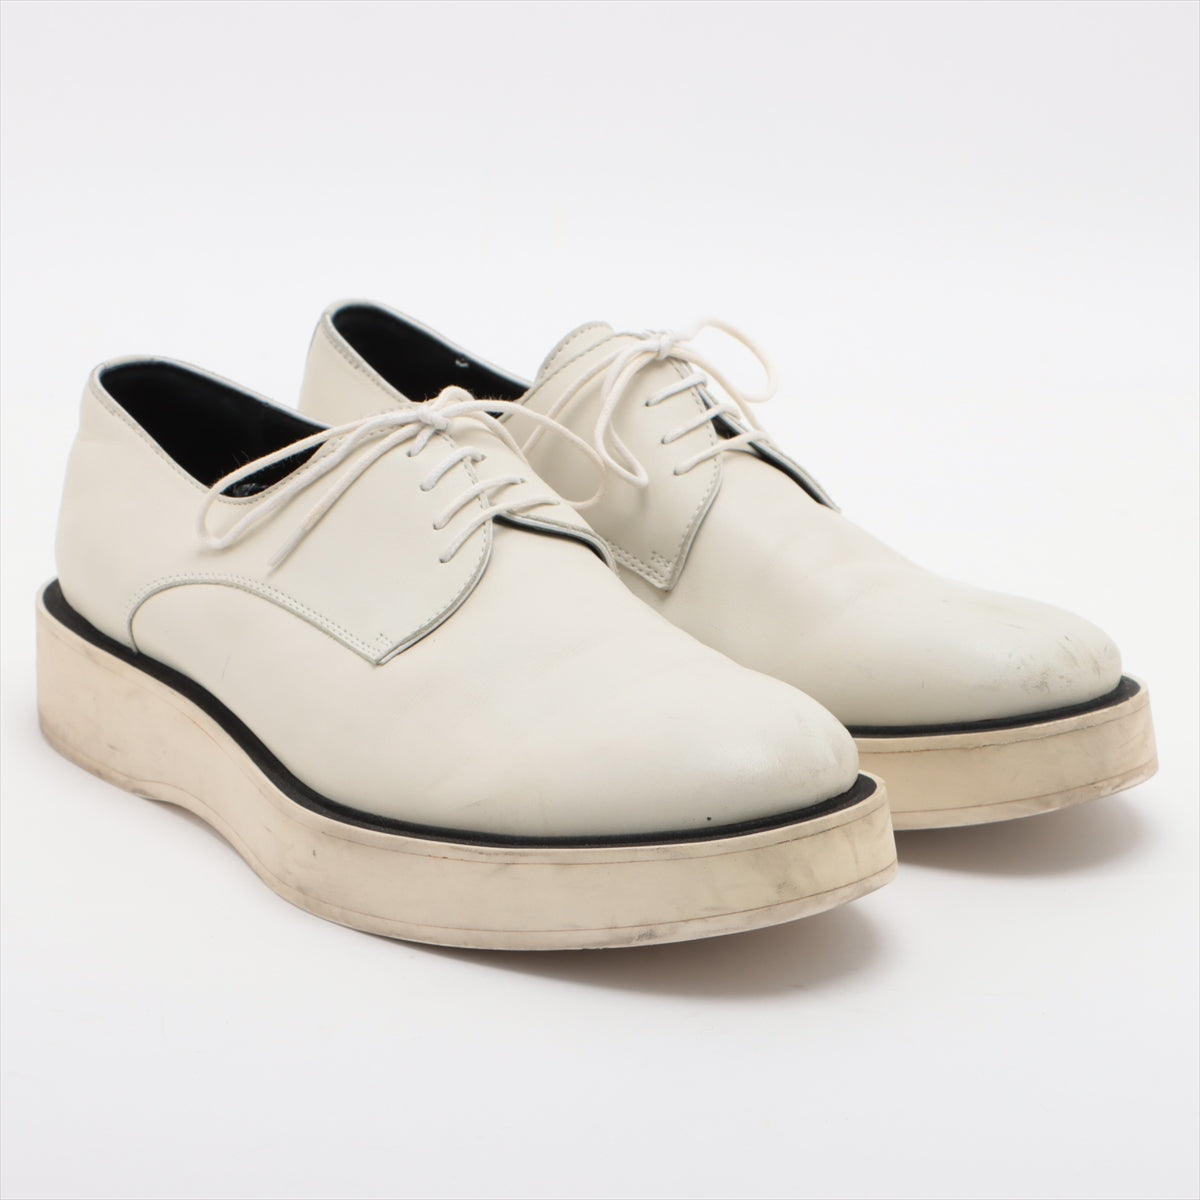 Bottega Veneta Leather Leather shoes 40 Men's White